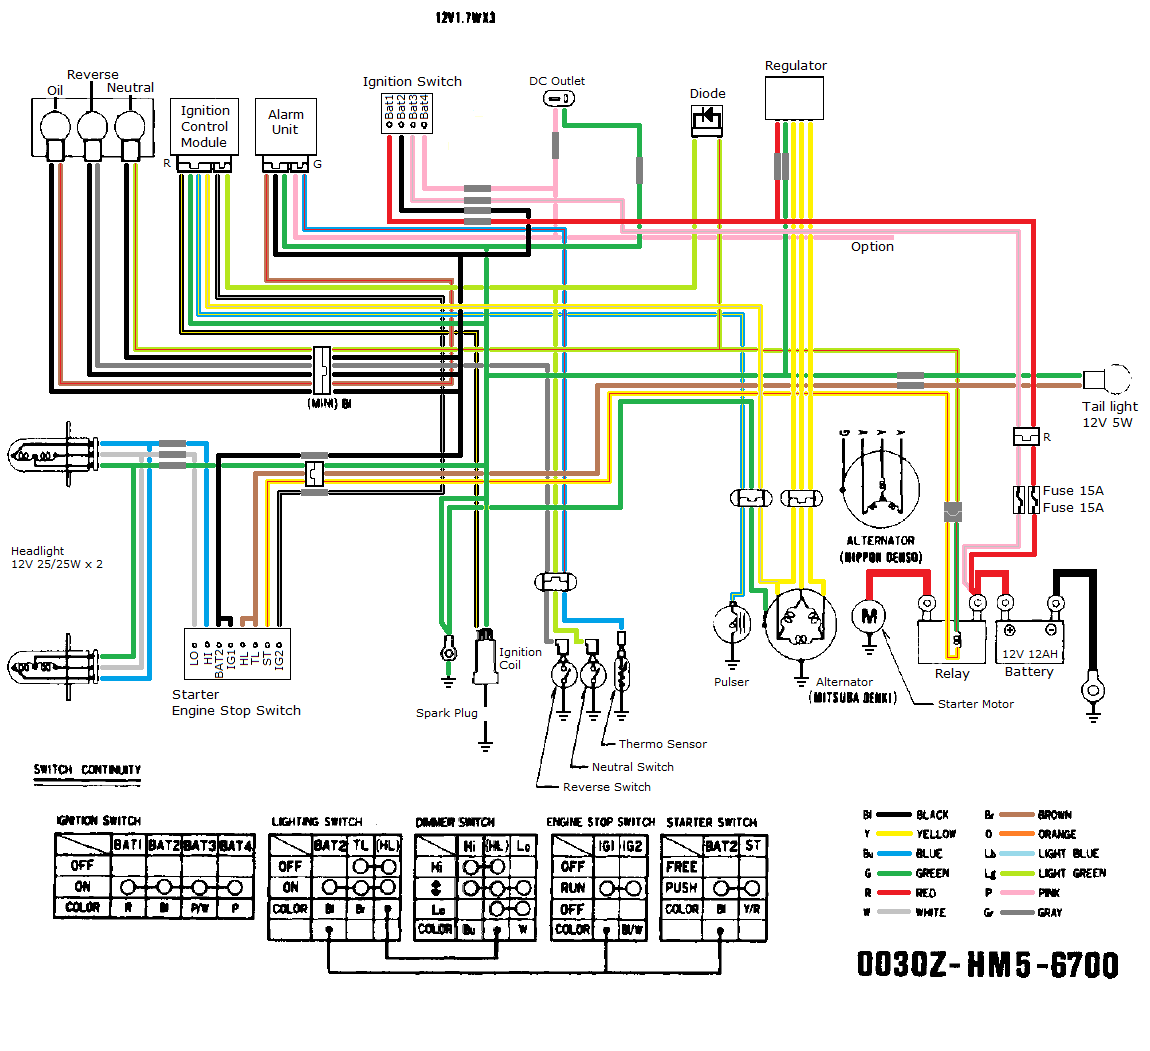 Diagram Gm Passkey Wiring Diagram Full Version Hd Quality Wiring Diagram Tabletodiagram Comprensorioaltavalsugana It